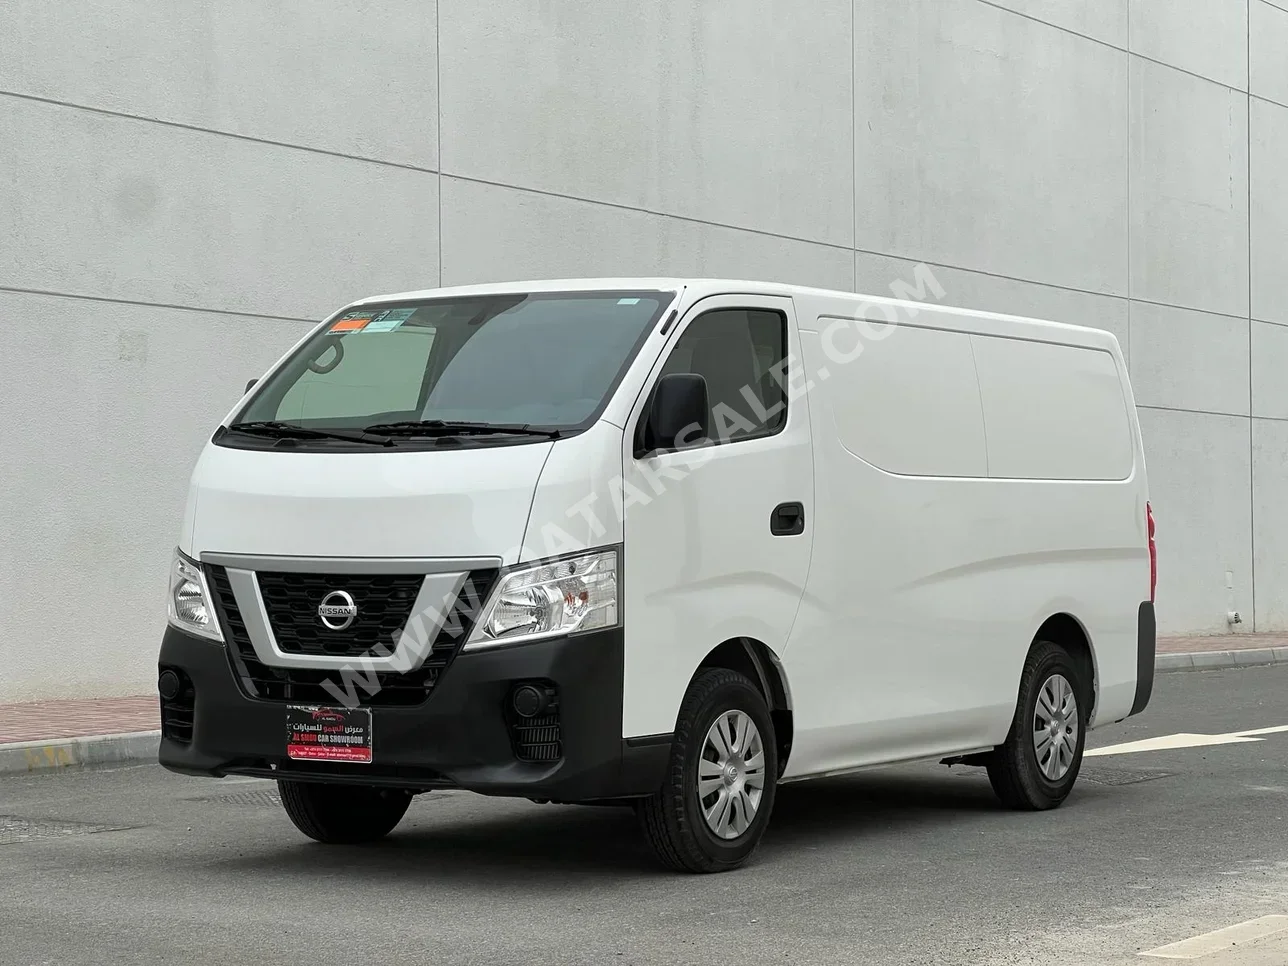 Nissan  Urvan  2022  Automatic  10,000 Km  4 Cylinder  Front Wheel Drive (FWD)  Van / Bus  White